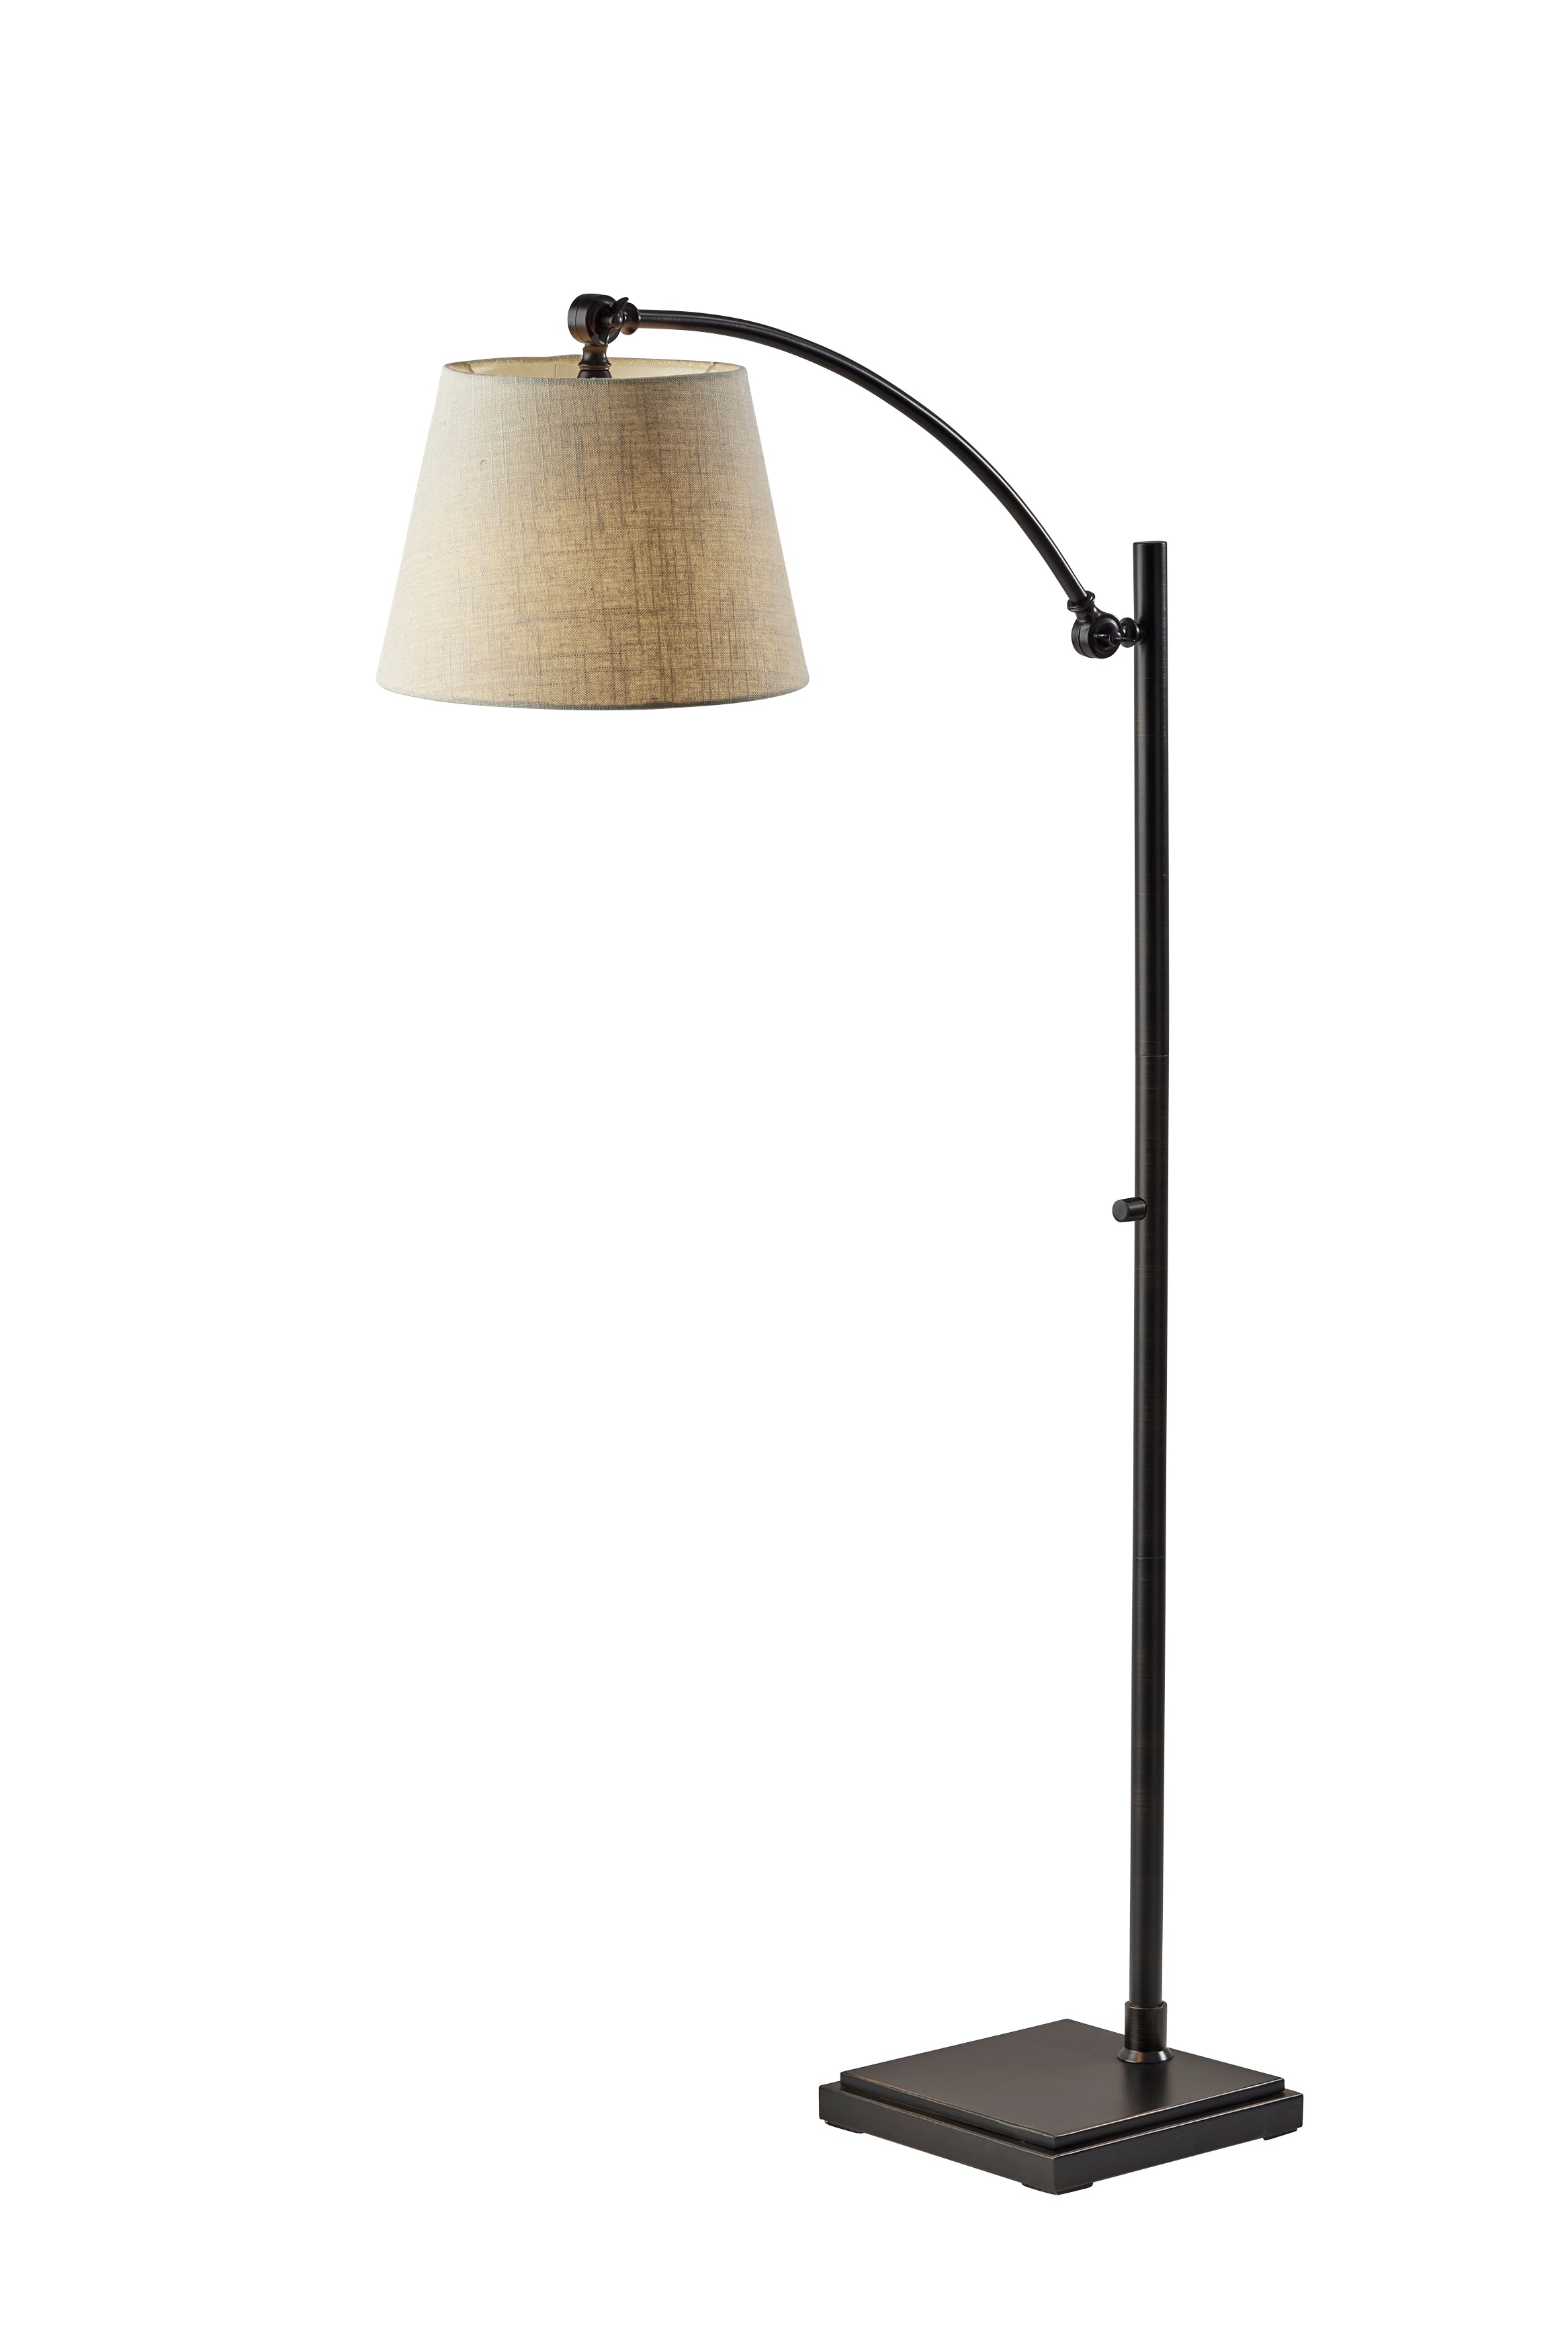 YORK Floor lamp Bronze - 1529-26 | ADESSO